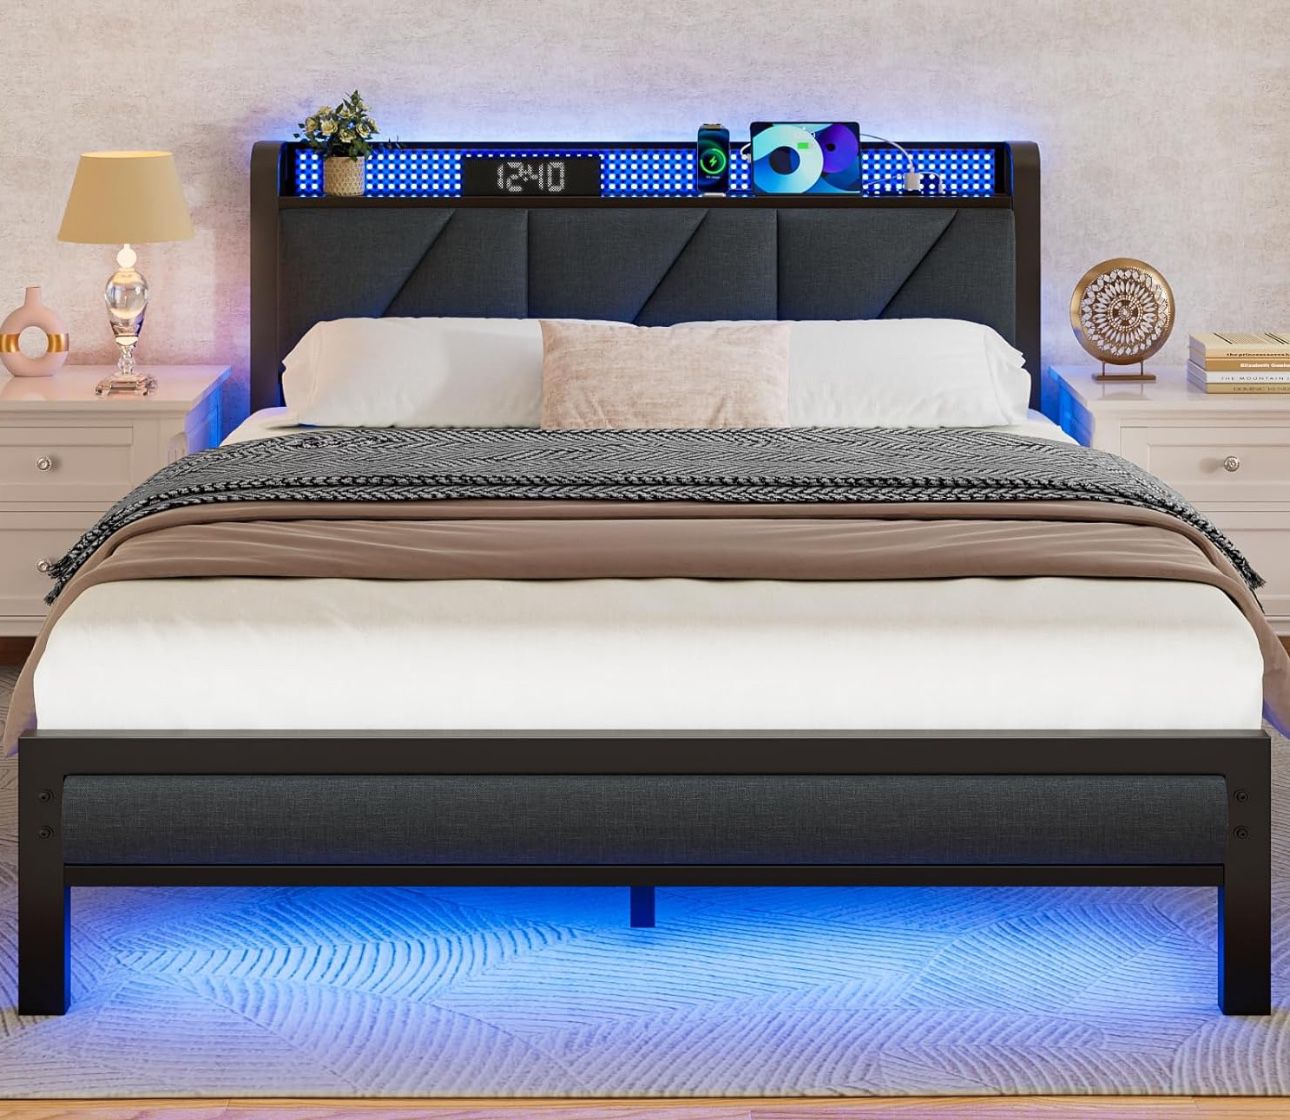 Furnulem Queen Size Bed Frame with Headboard and LED Lights,Upholstered Bedframe with Charging Station and USB Port, Platform Metal Bed Frame,No Box S